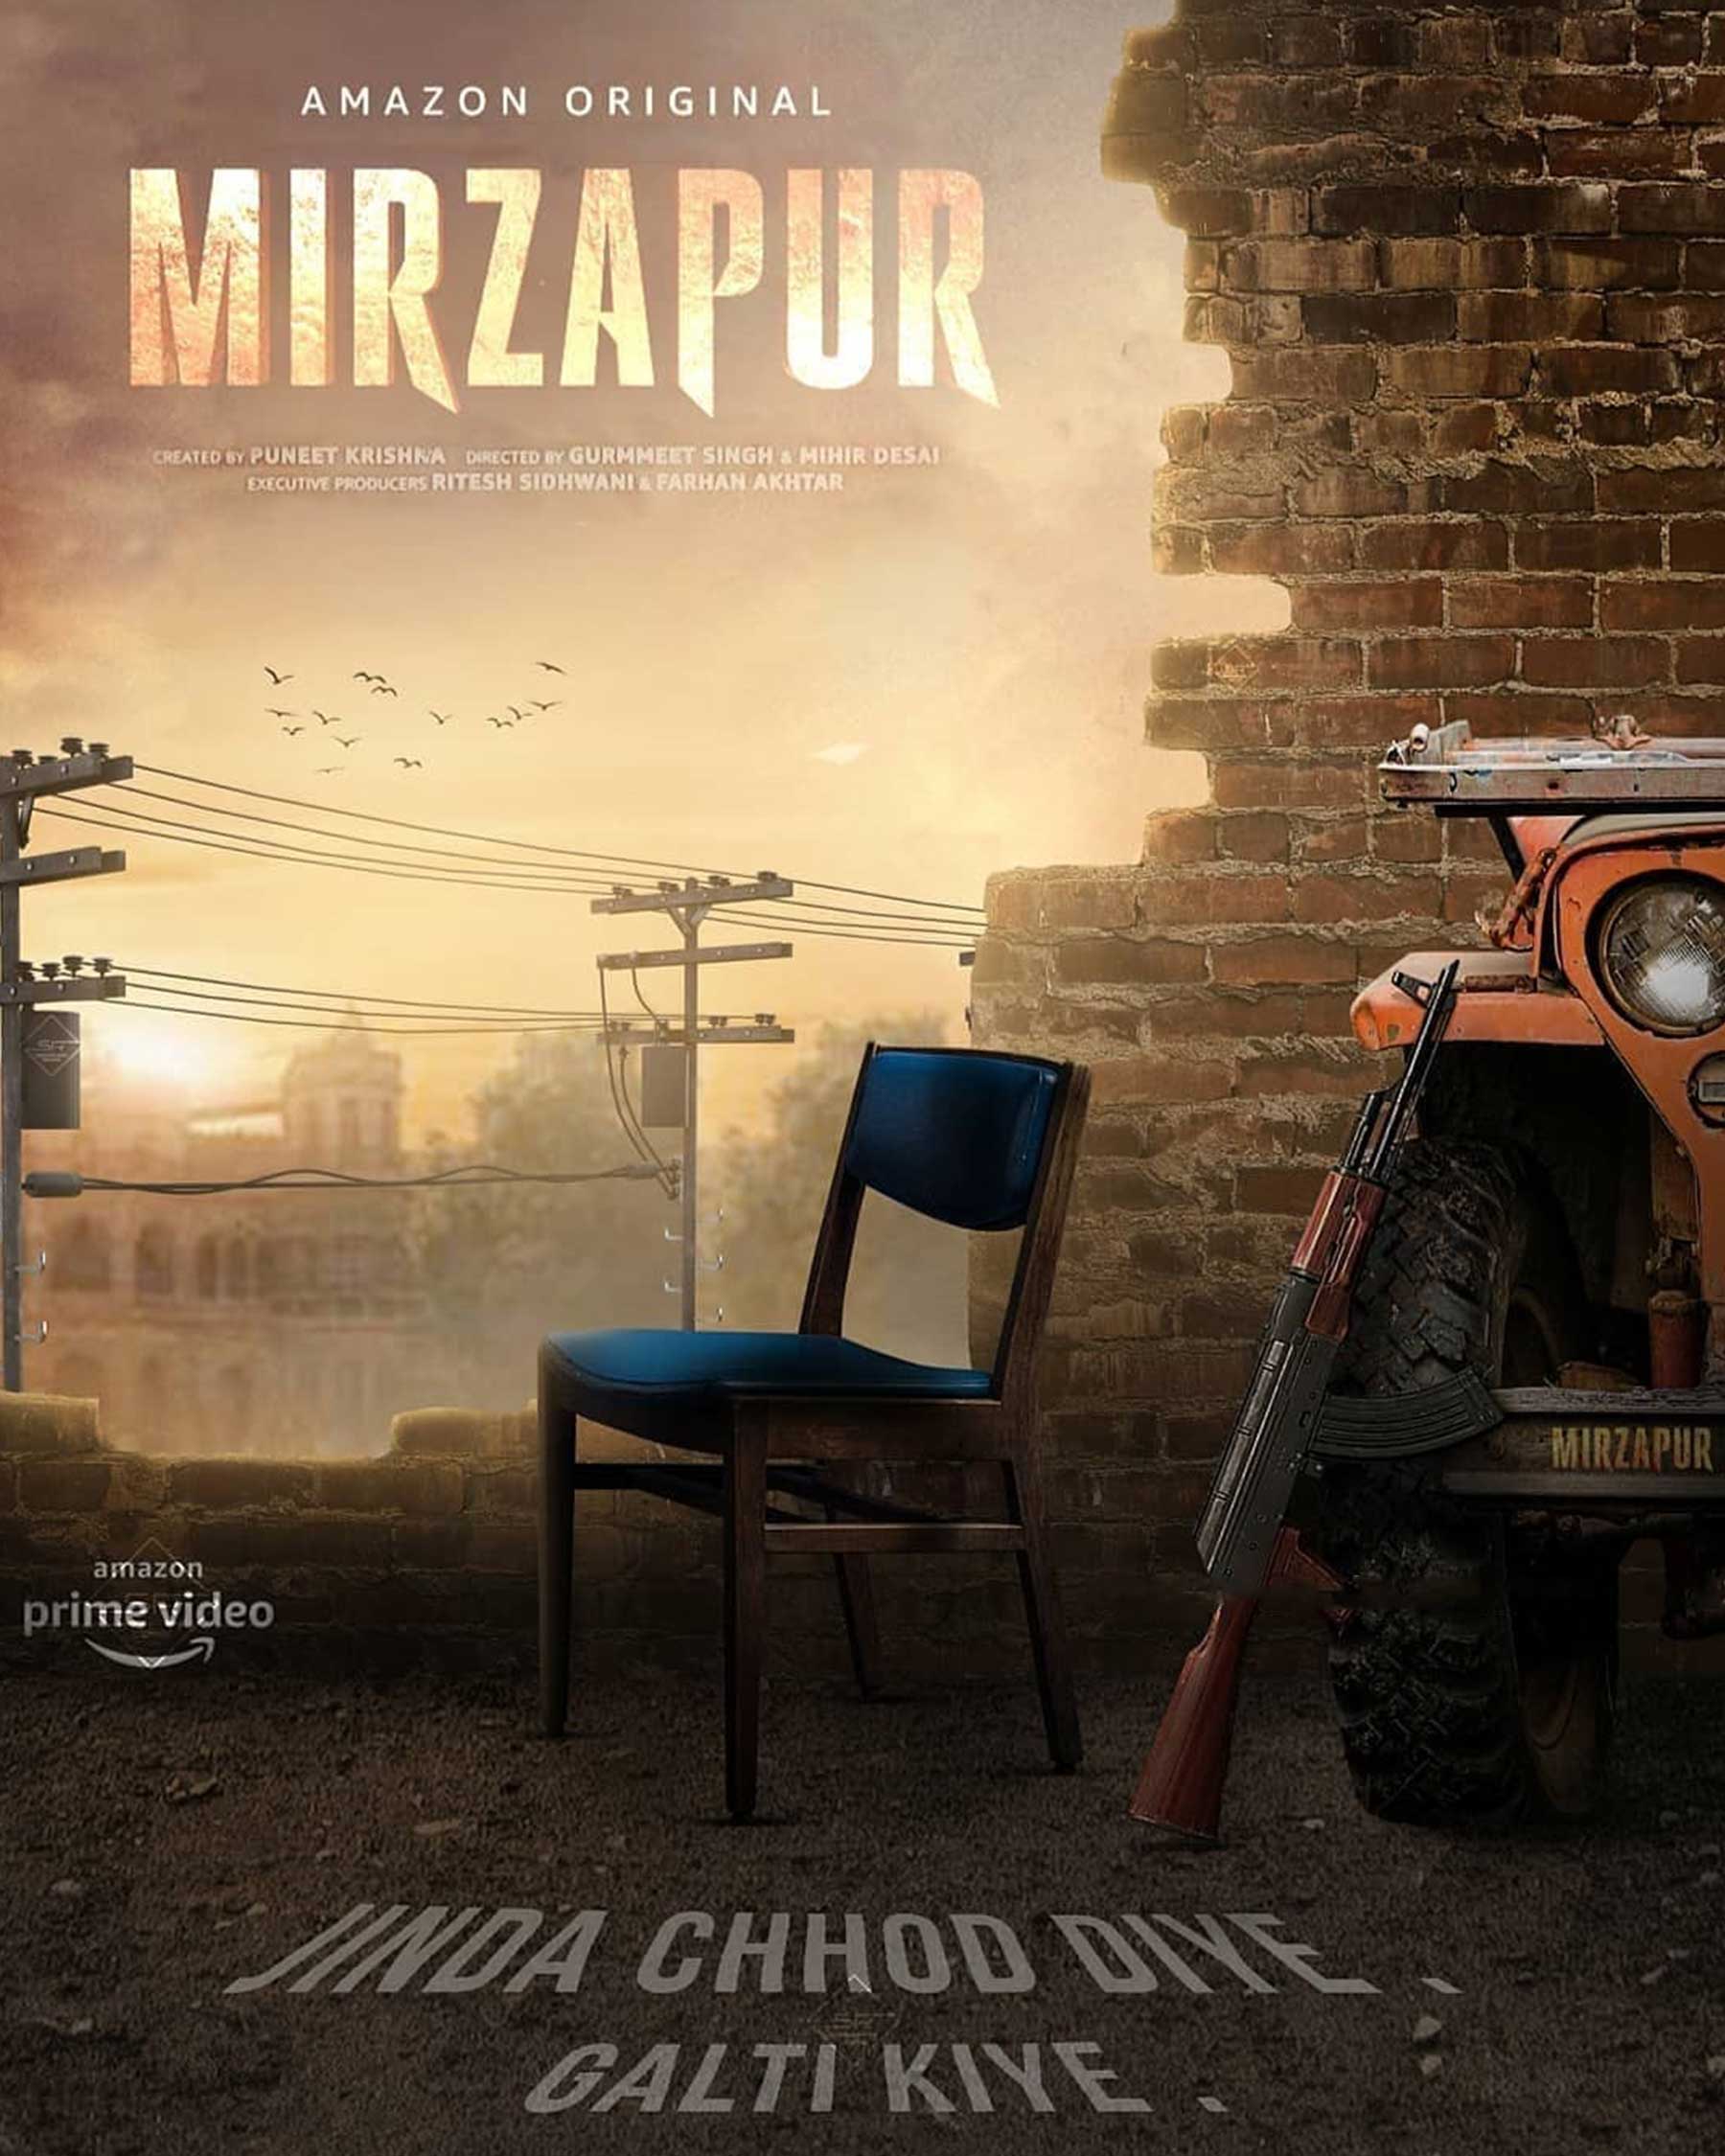 Mirzapur Movie Poster PicsArt Background Free Stock Image